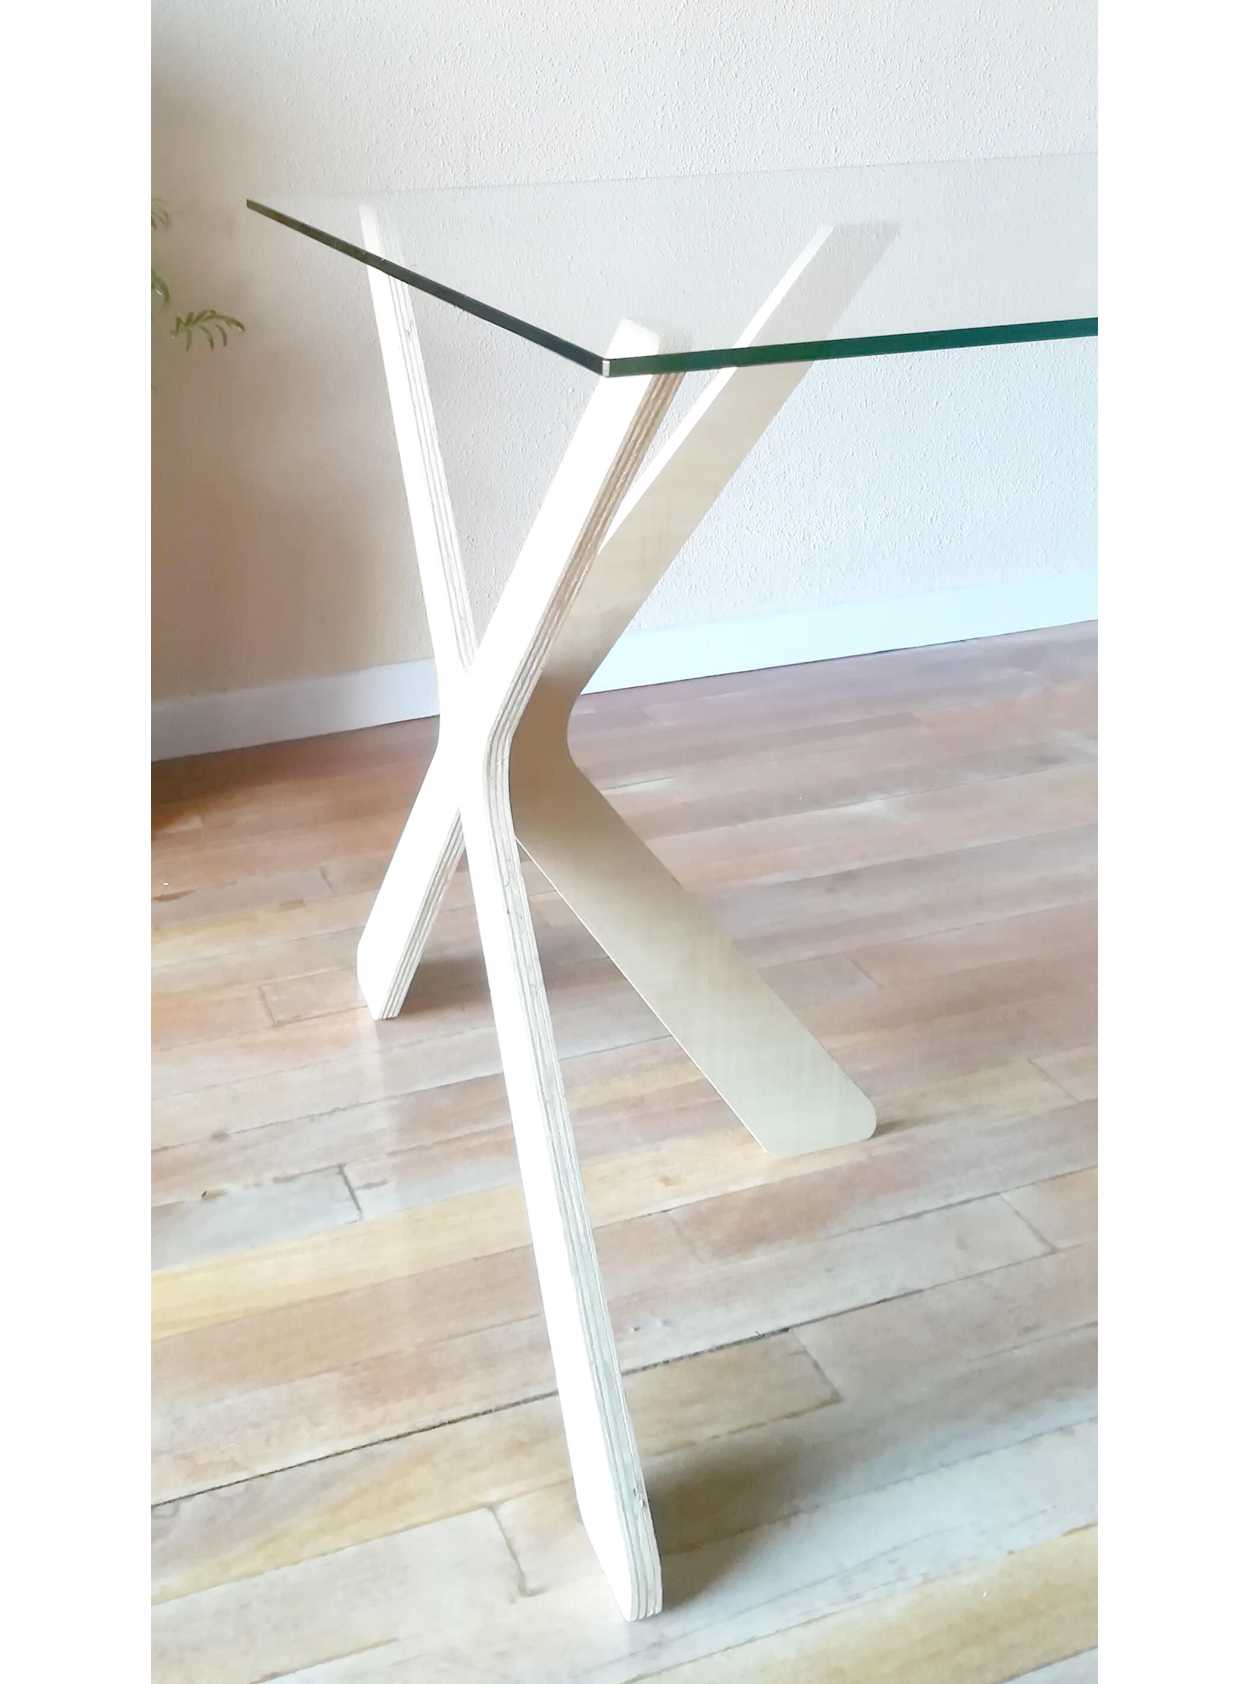 Modern style table legs